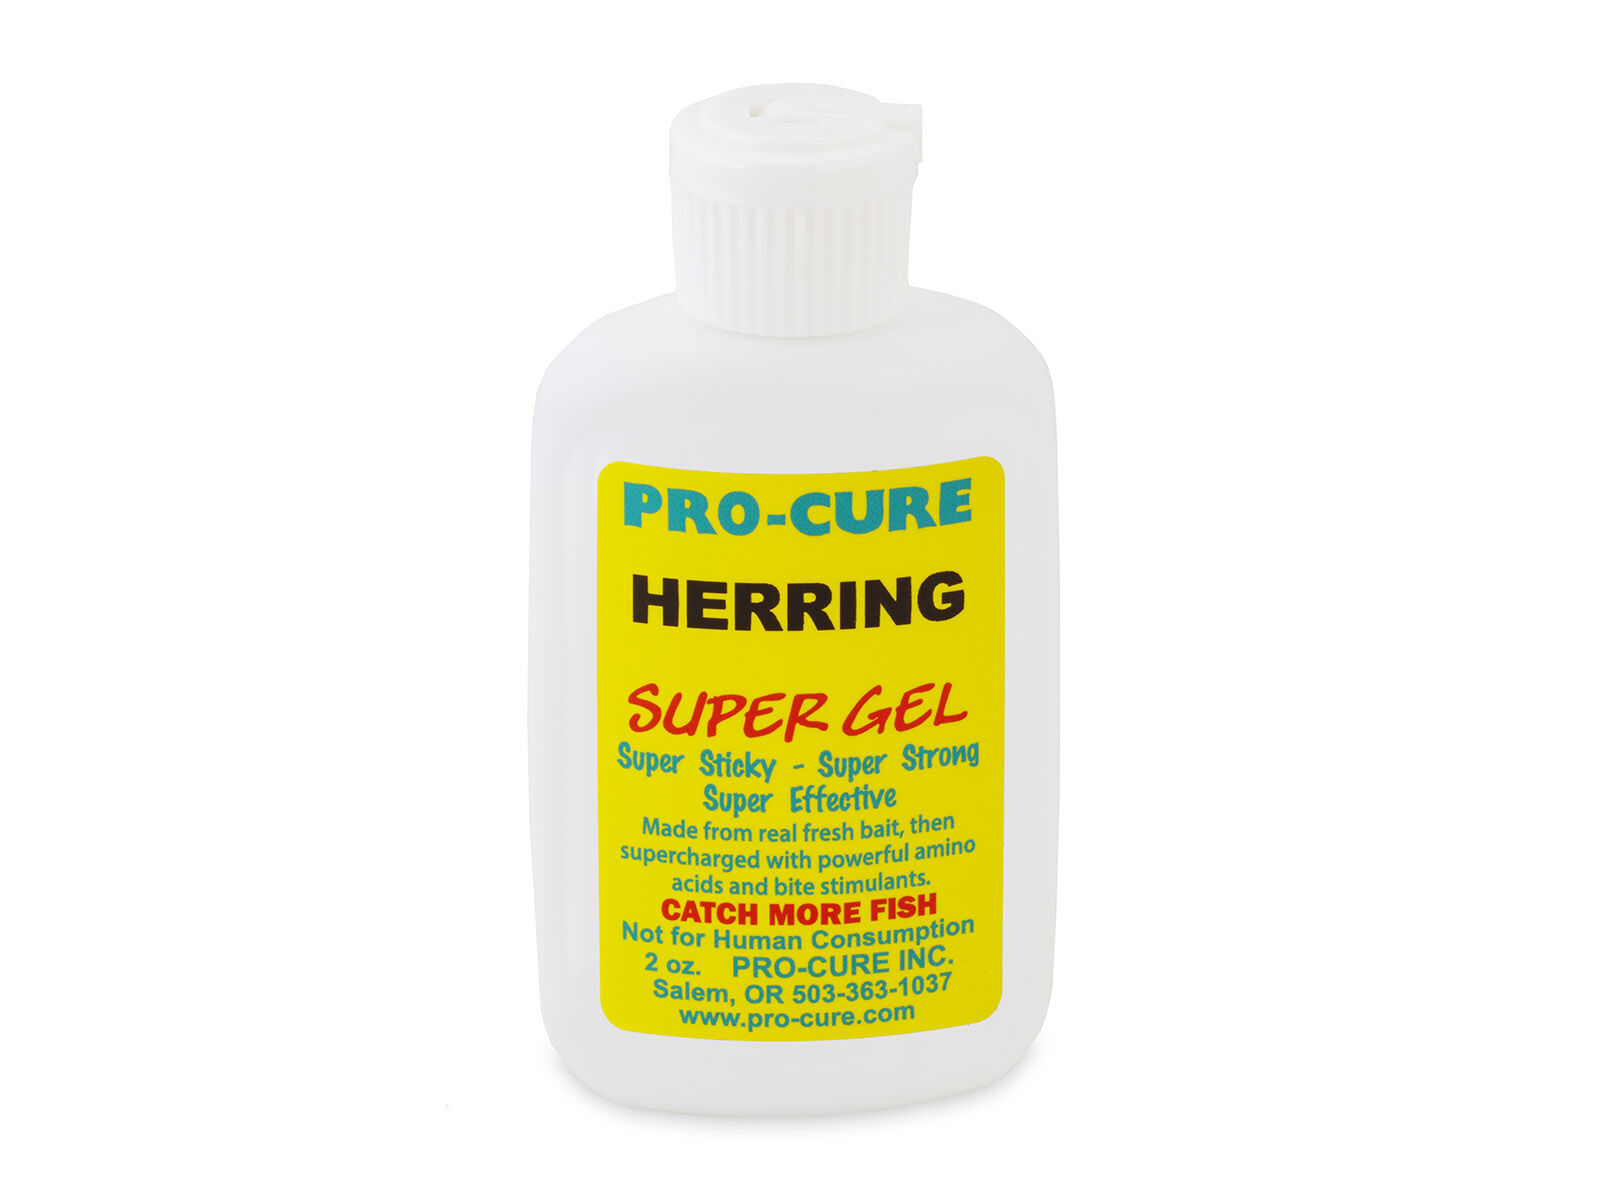 Pro-Cure Super Gel - Herring